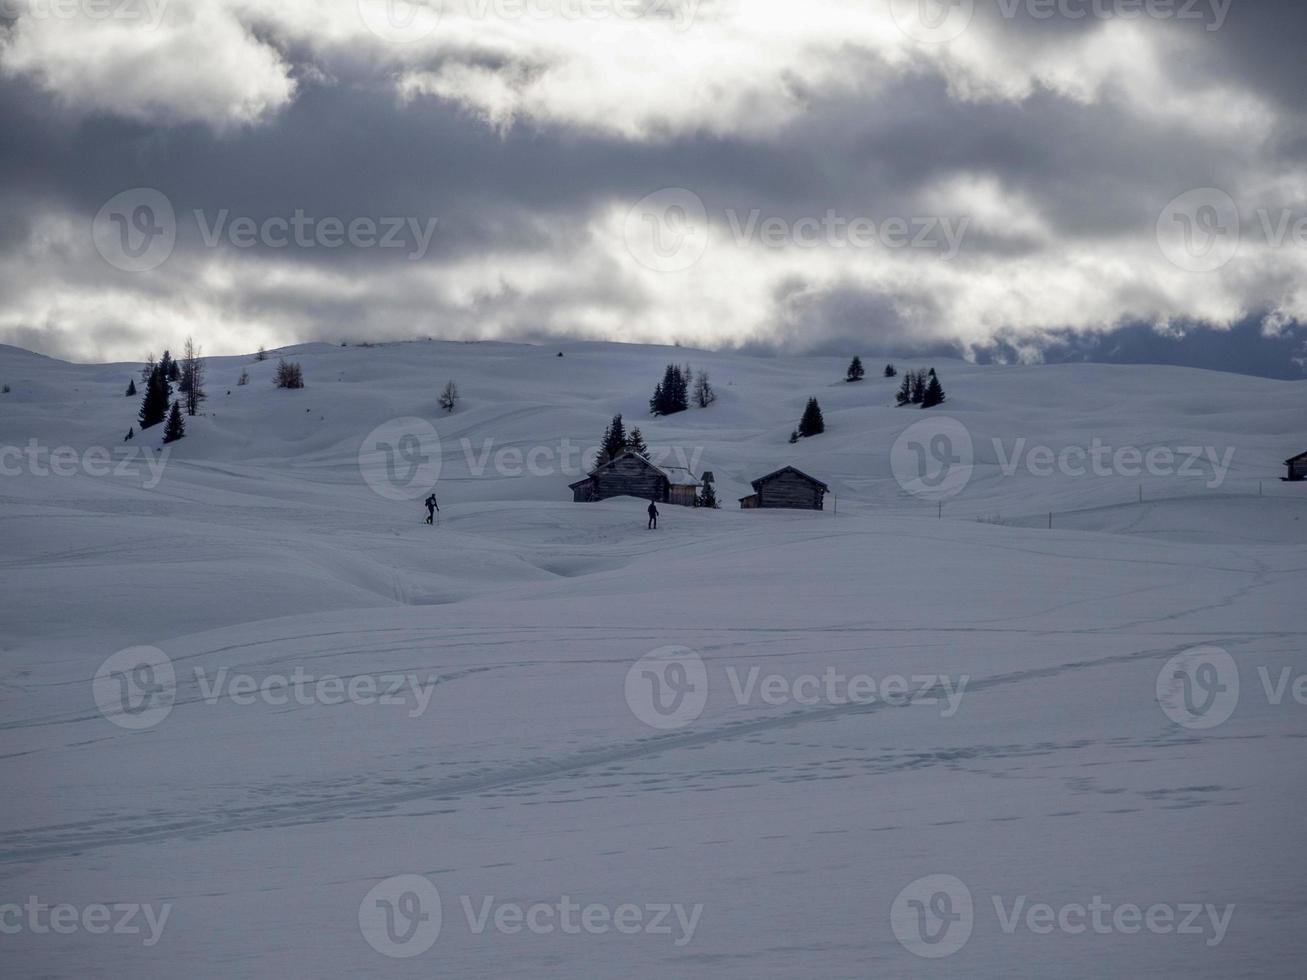 dolomiter snö panorama trä- hydda val badia armentarola foto